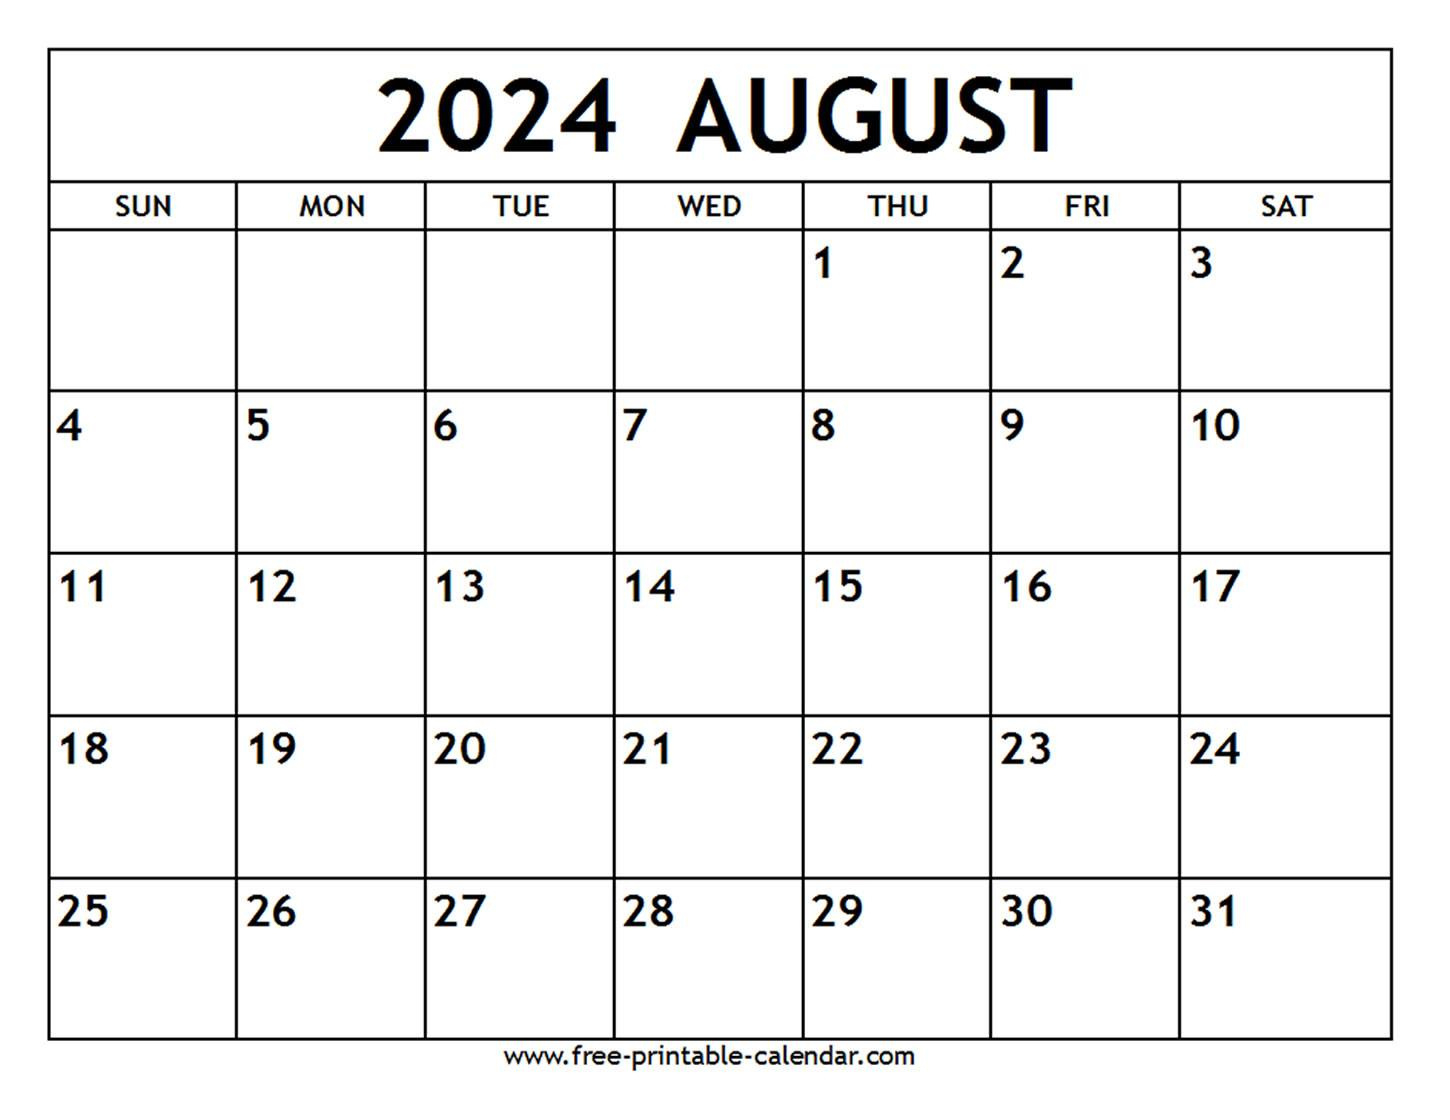 August 2024 Calendar - Free-Printable-Calendar within Free Printable Calendar August 2024 With Title